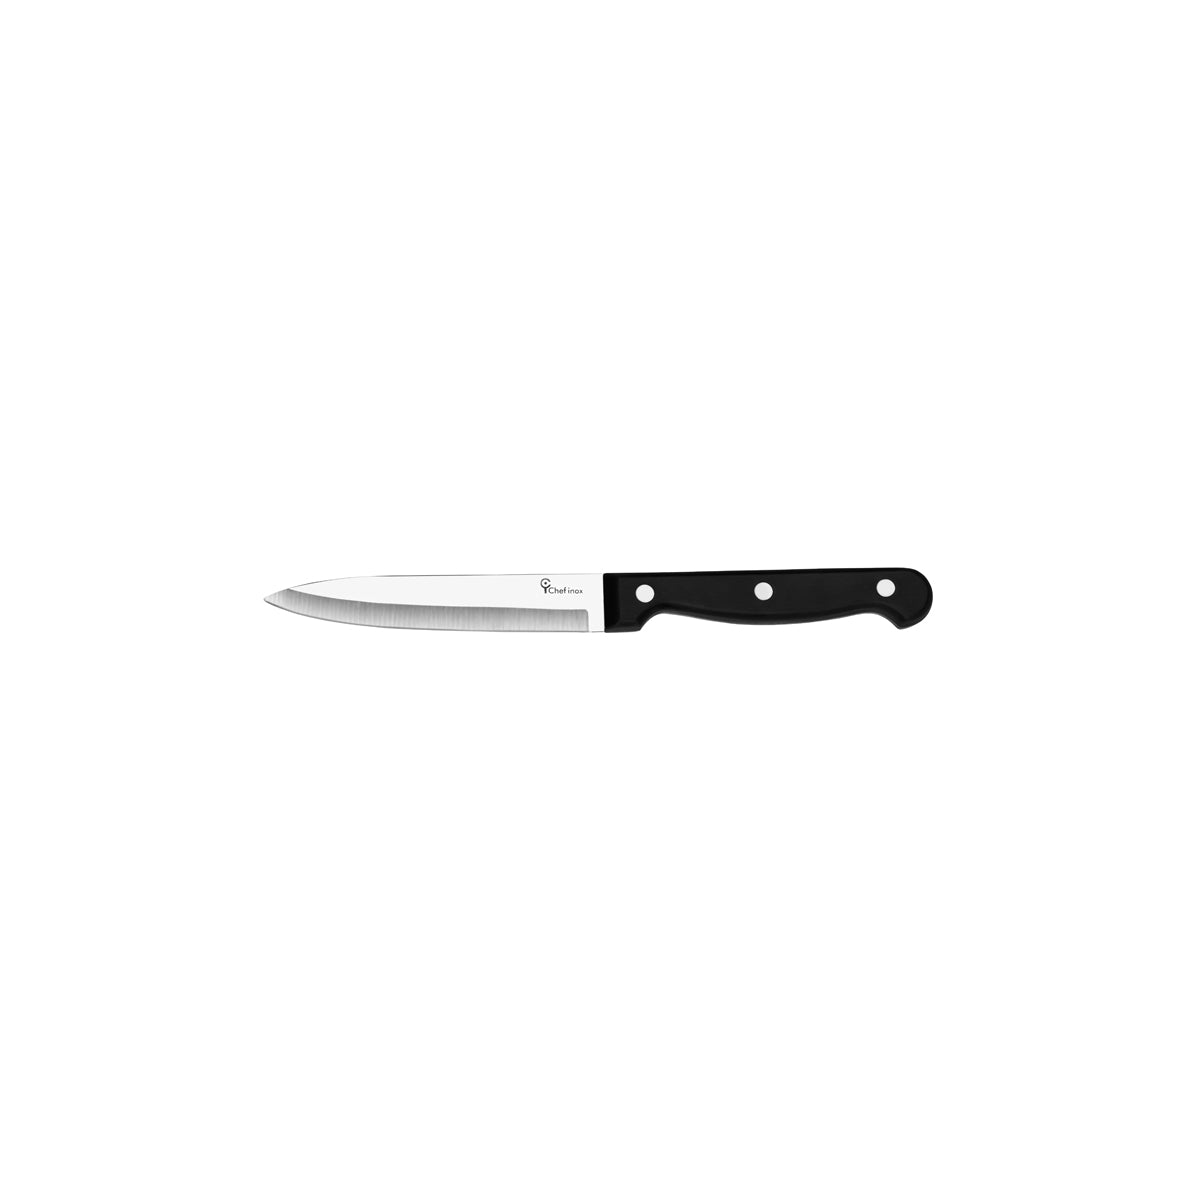 GS-2002 Get Set Vegetable Knife Black Handle 110mm Tomkin Australia Hospitality Supplies